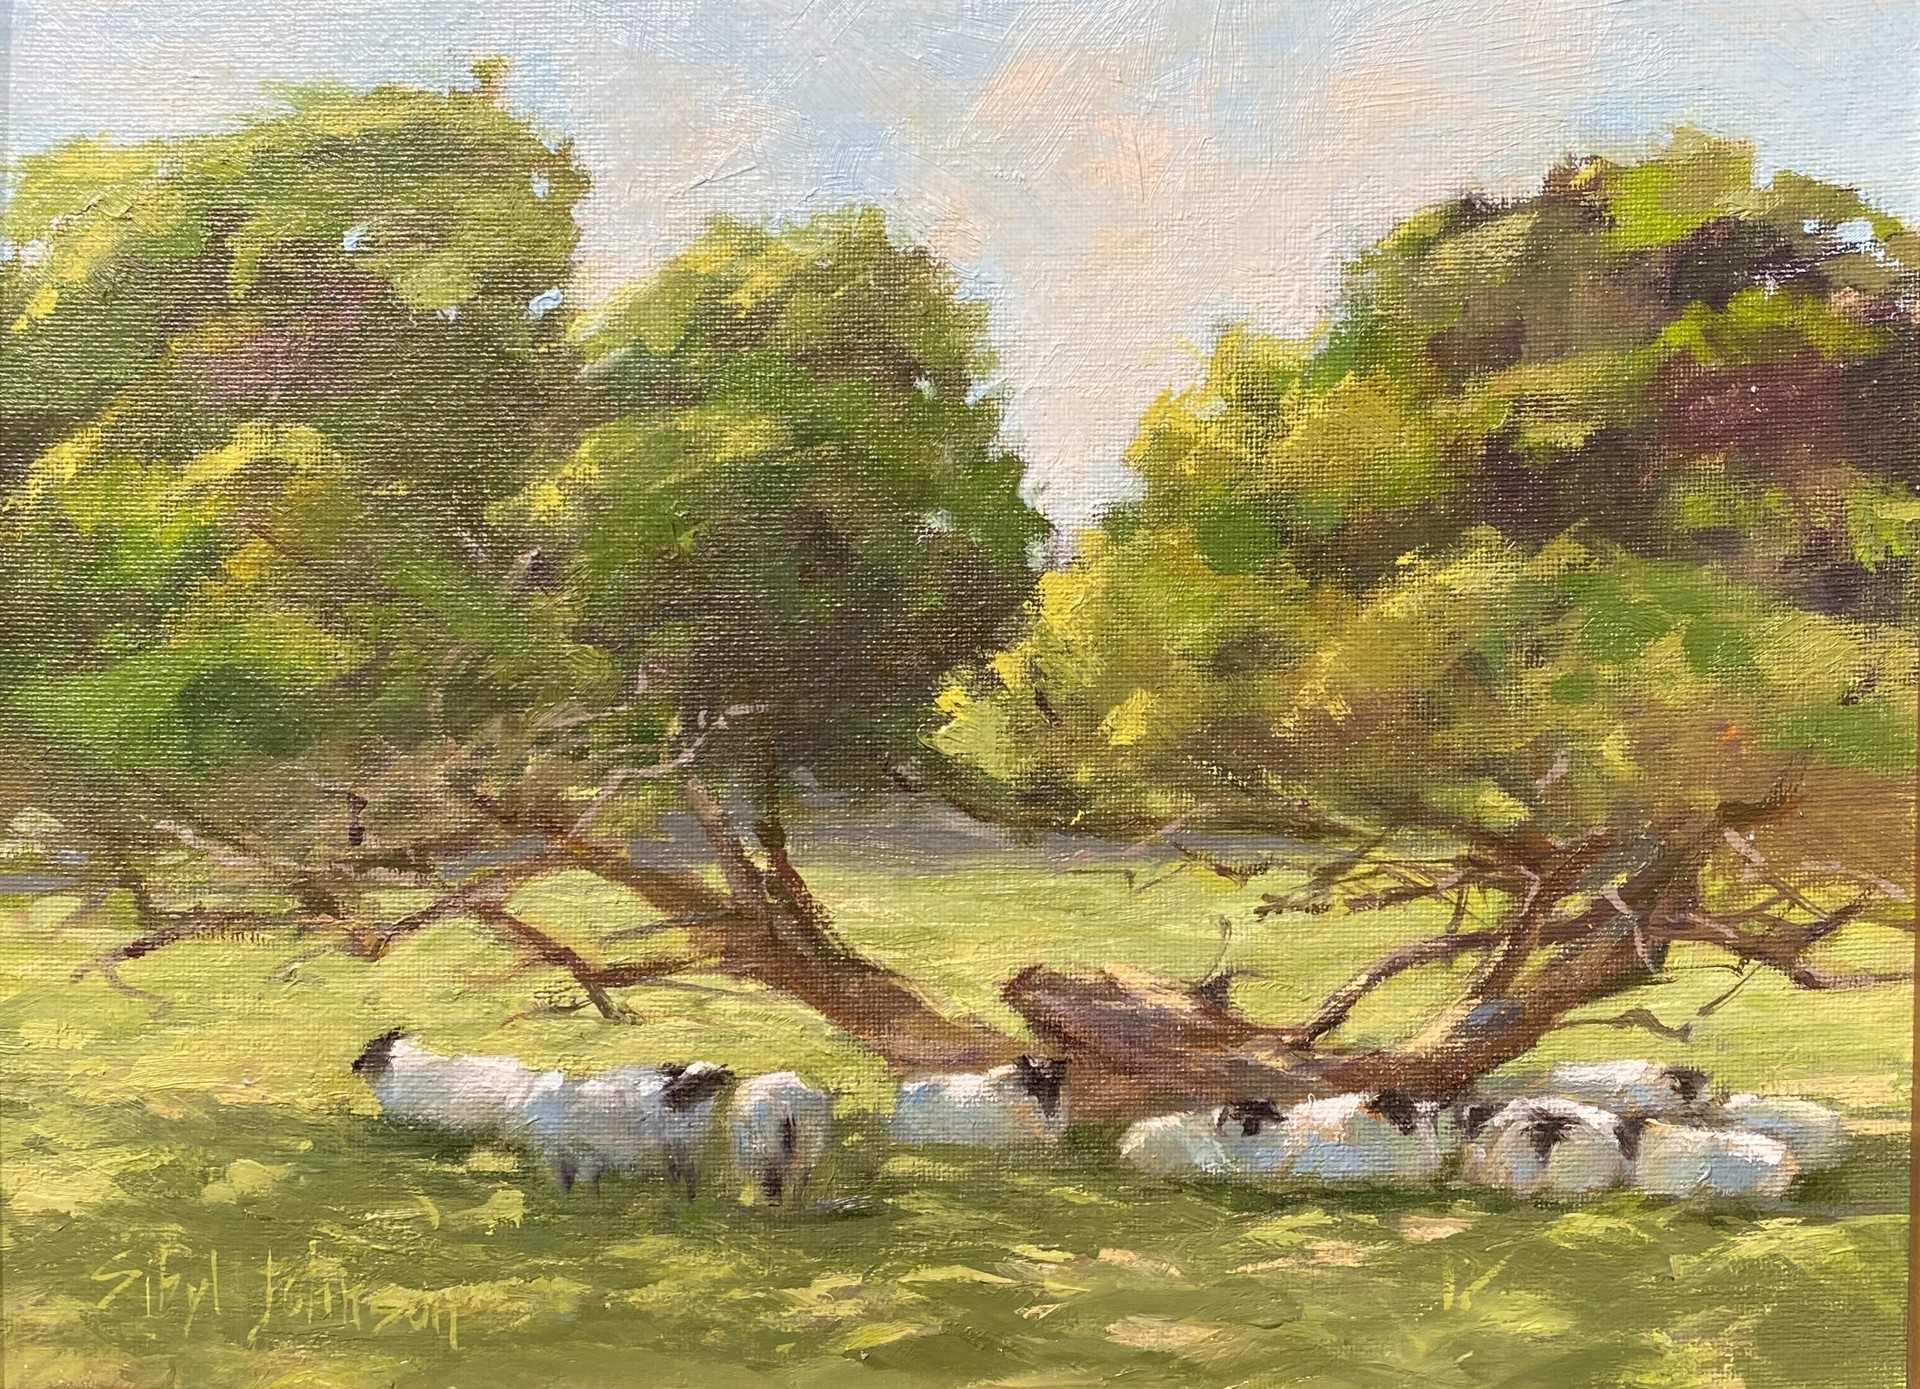 Counting Sheep by Sibyl Johnson